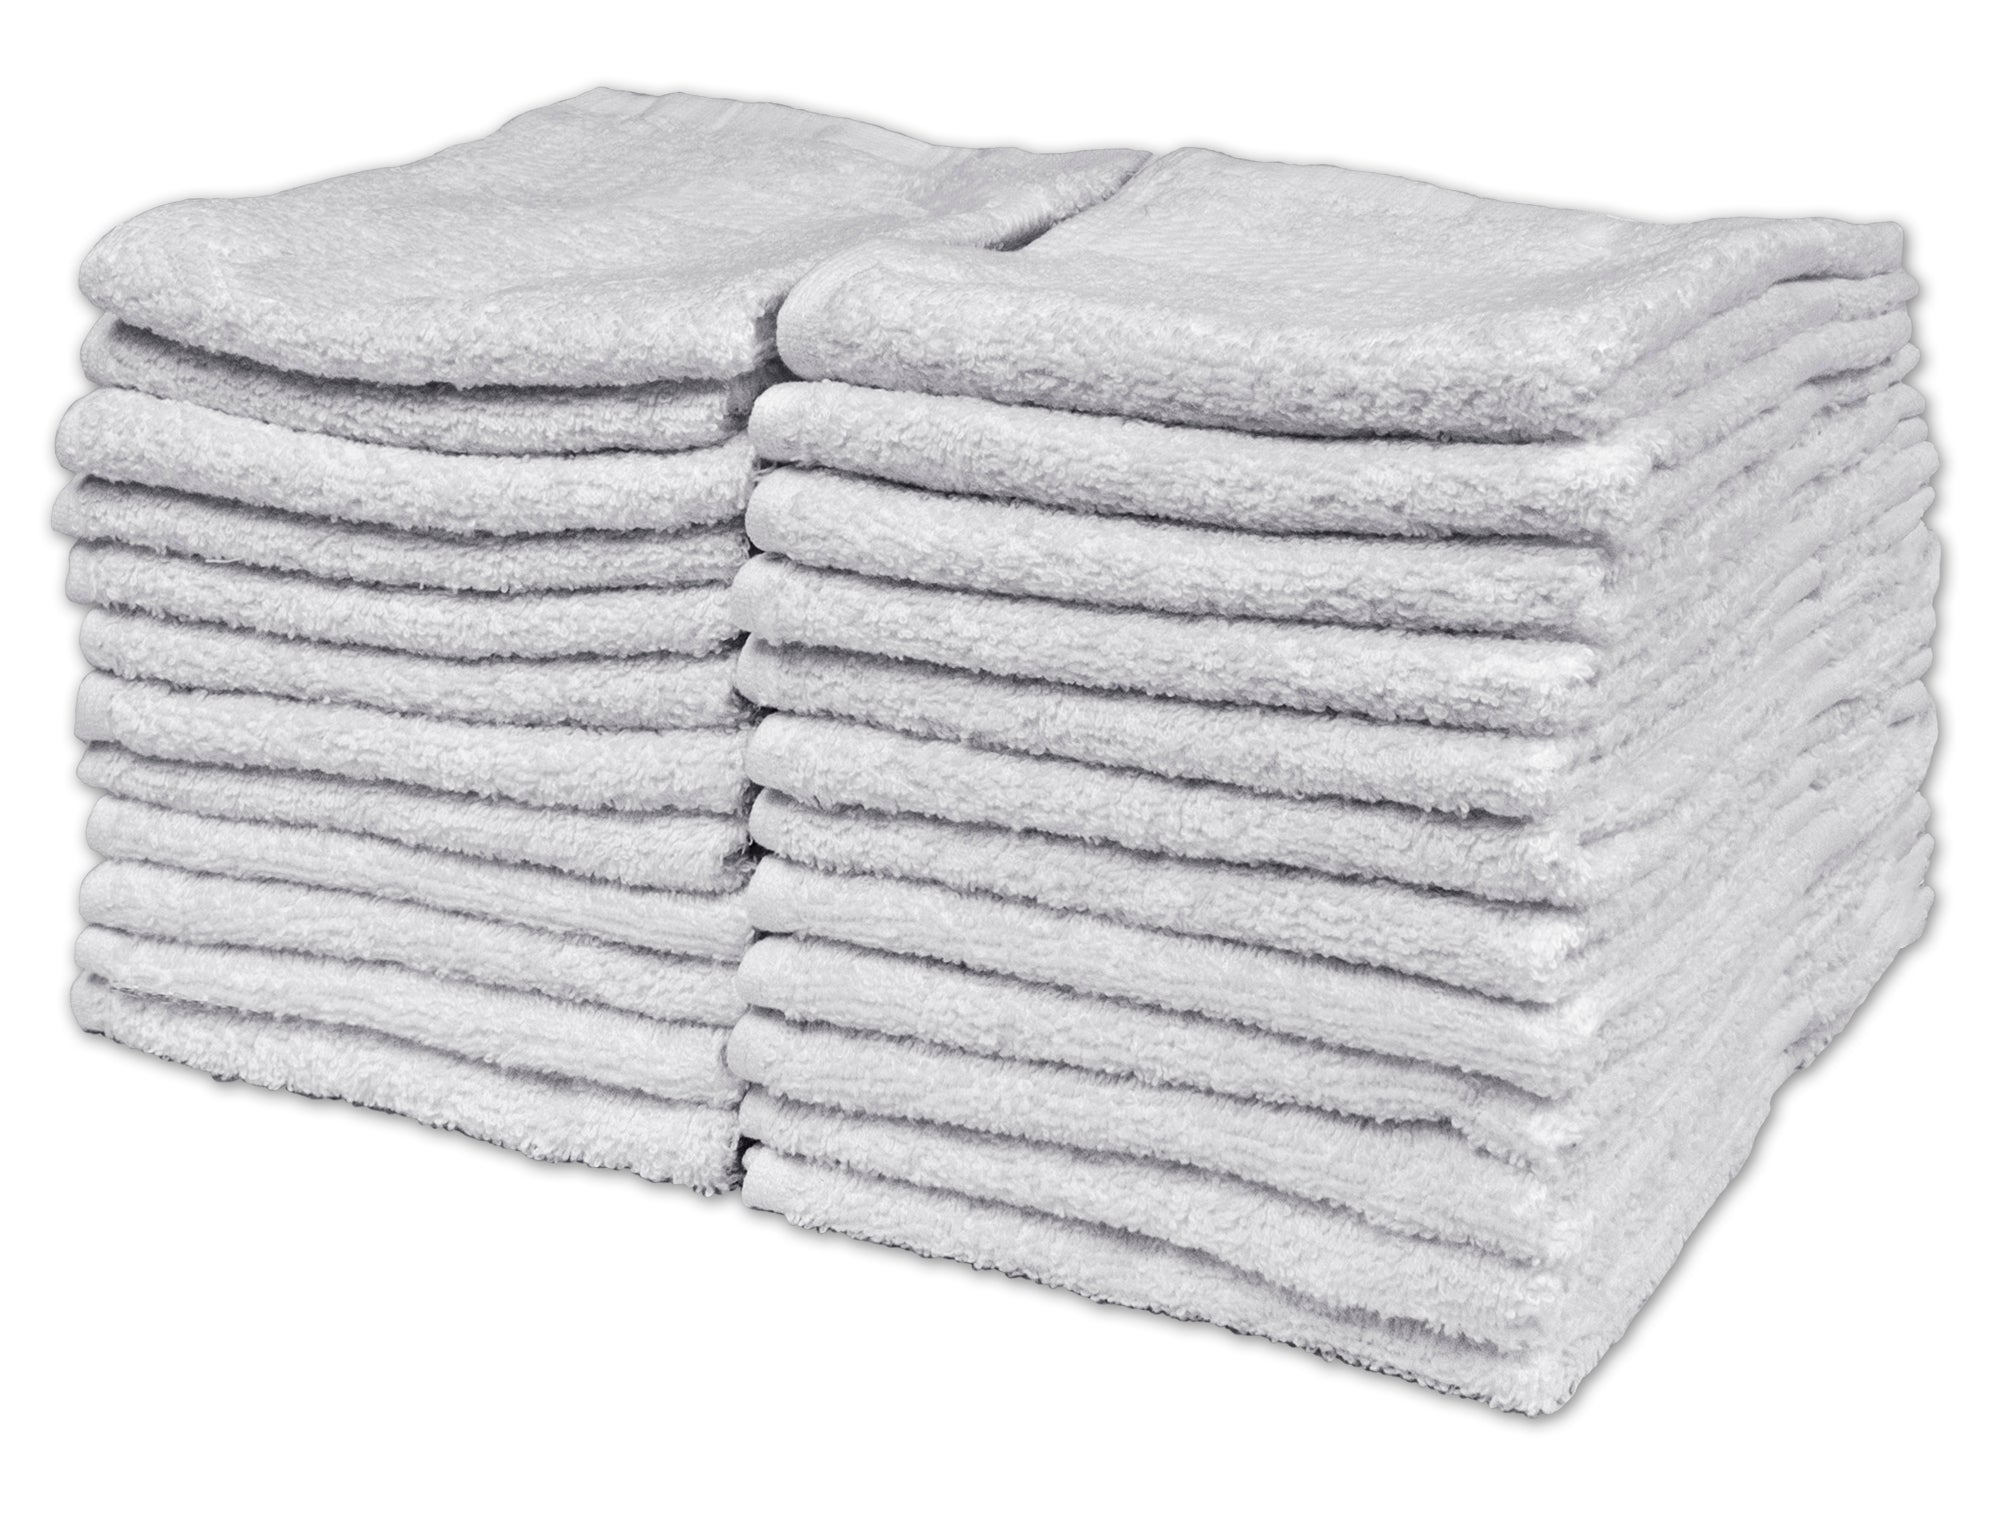 Superio Terry Cloth Rags White Washcloths 100% Cotton 12